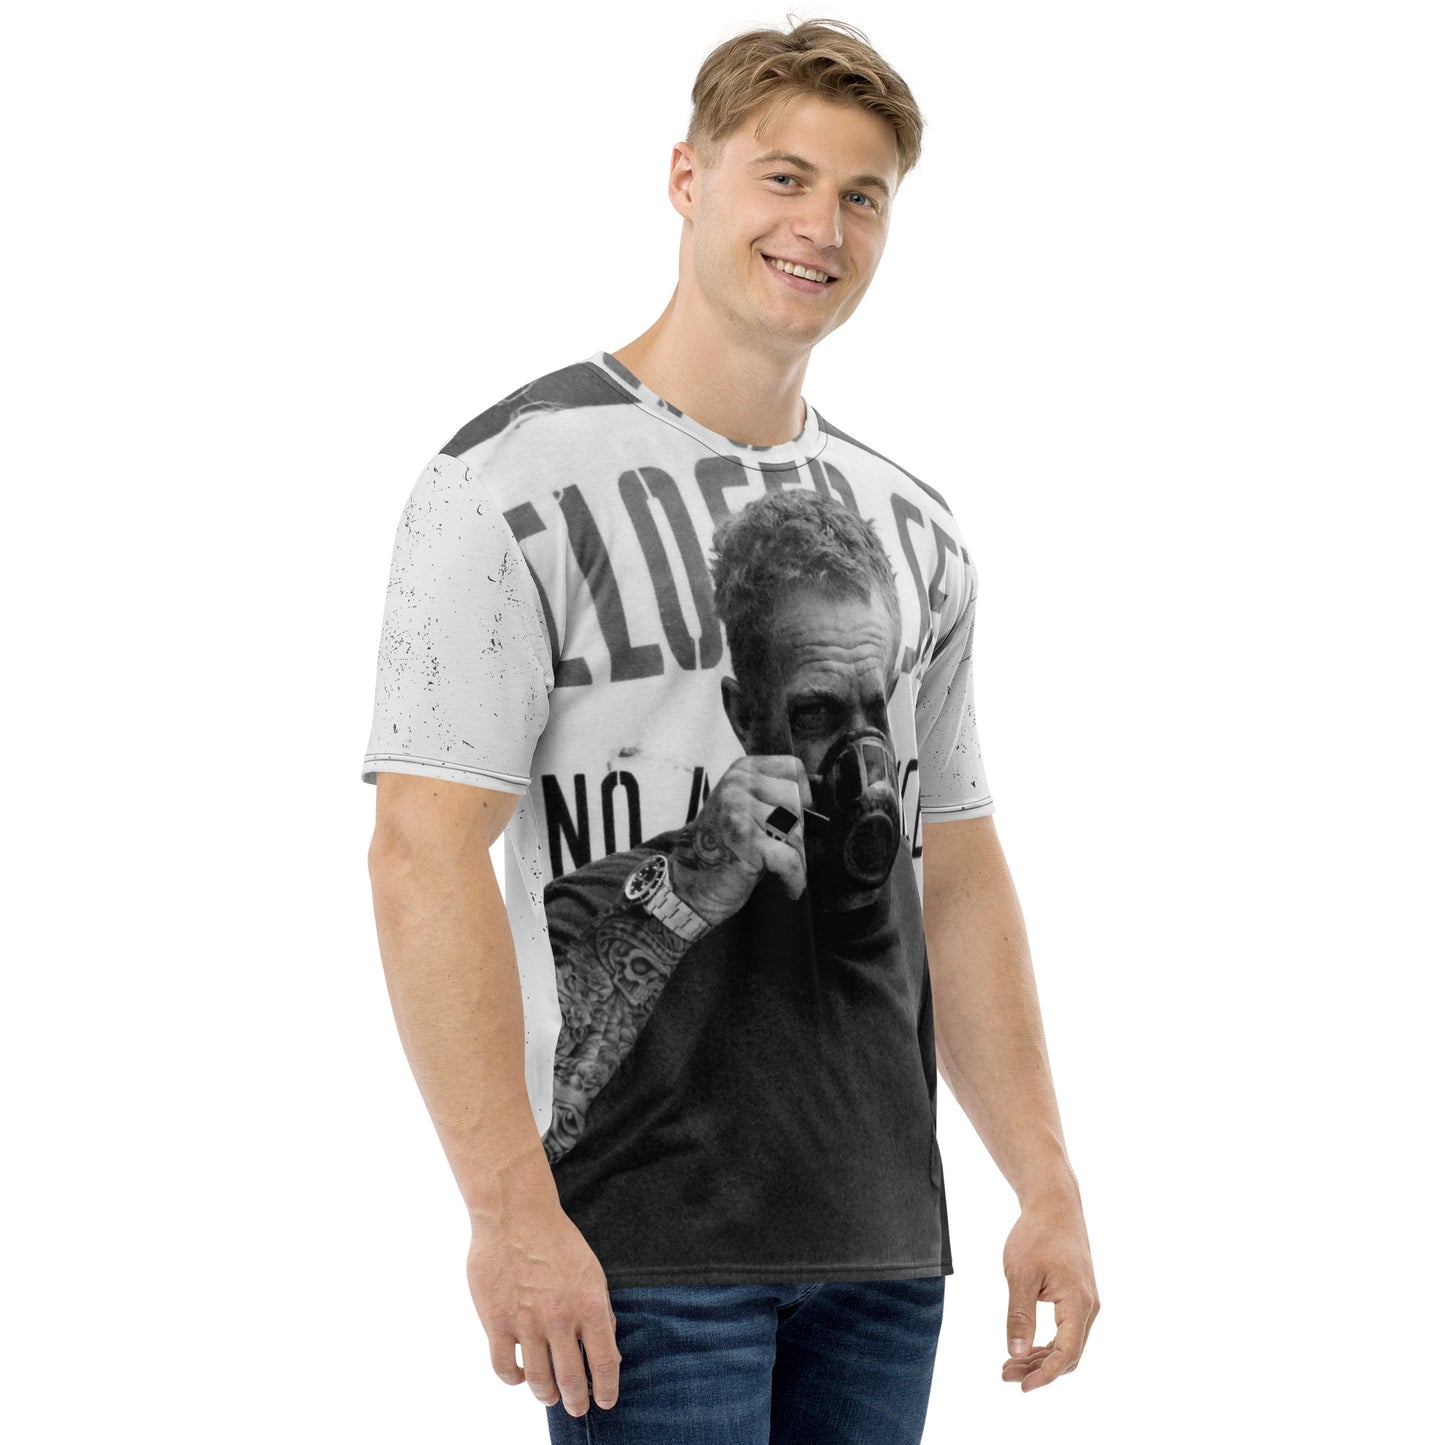 Steve McQueen Tattooed KiSS Men's t-shirt - Retro Hollywood Great Escape ink